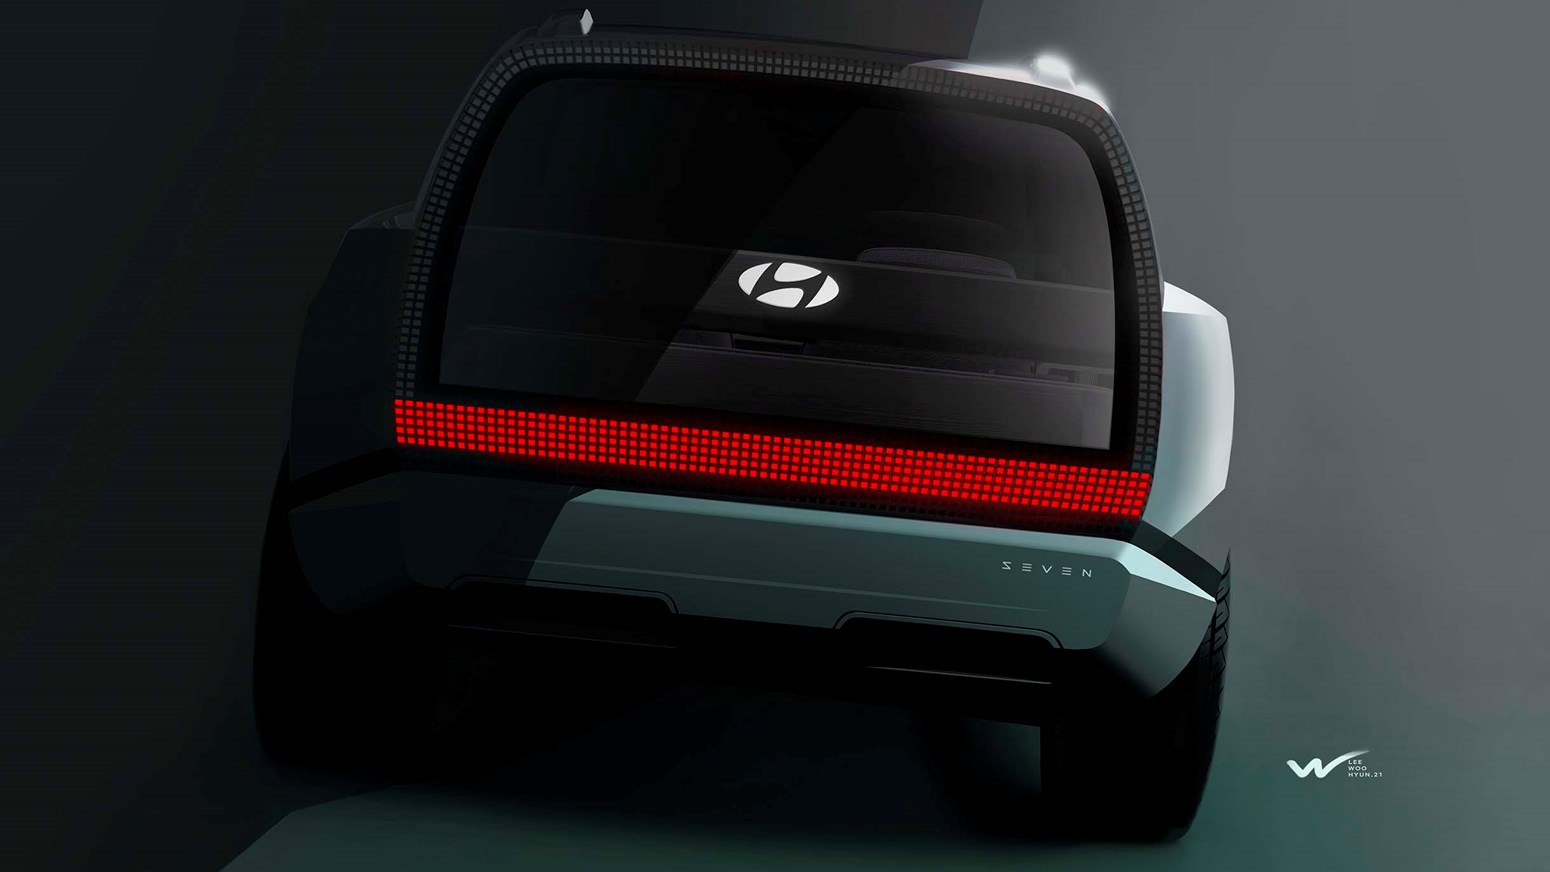 Konceptbil Hyundai SEVEN med pixel-lys